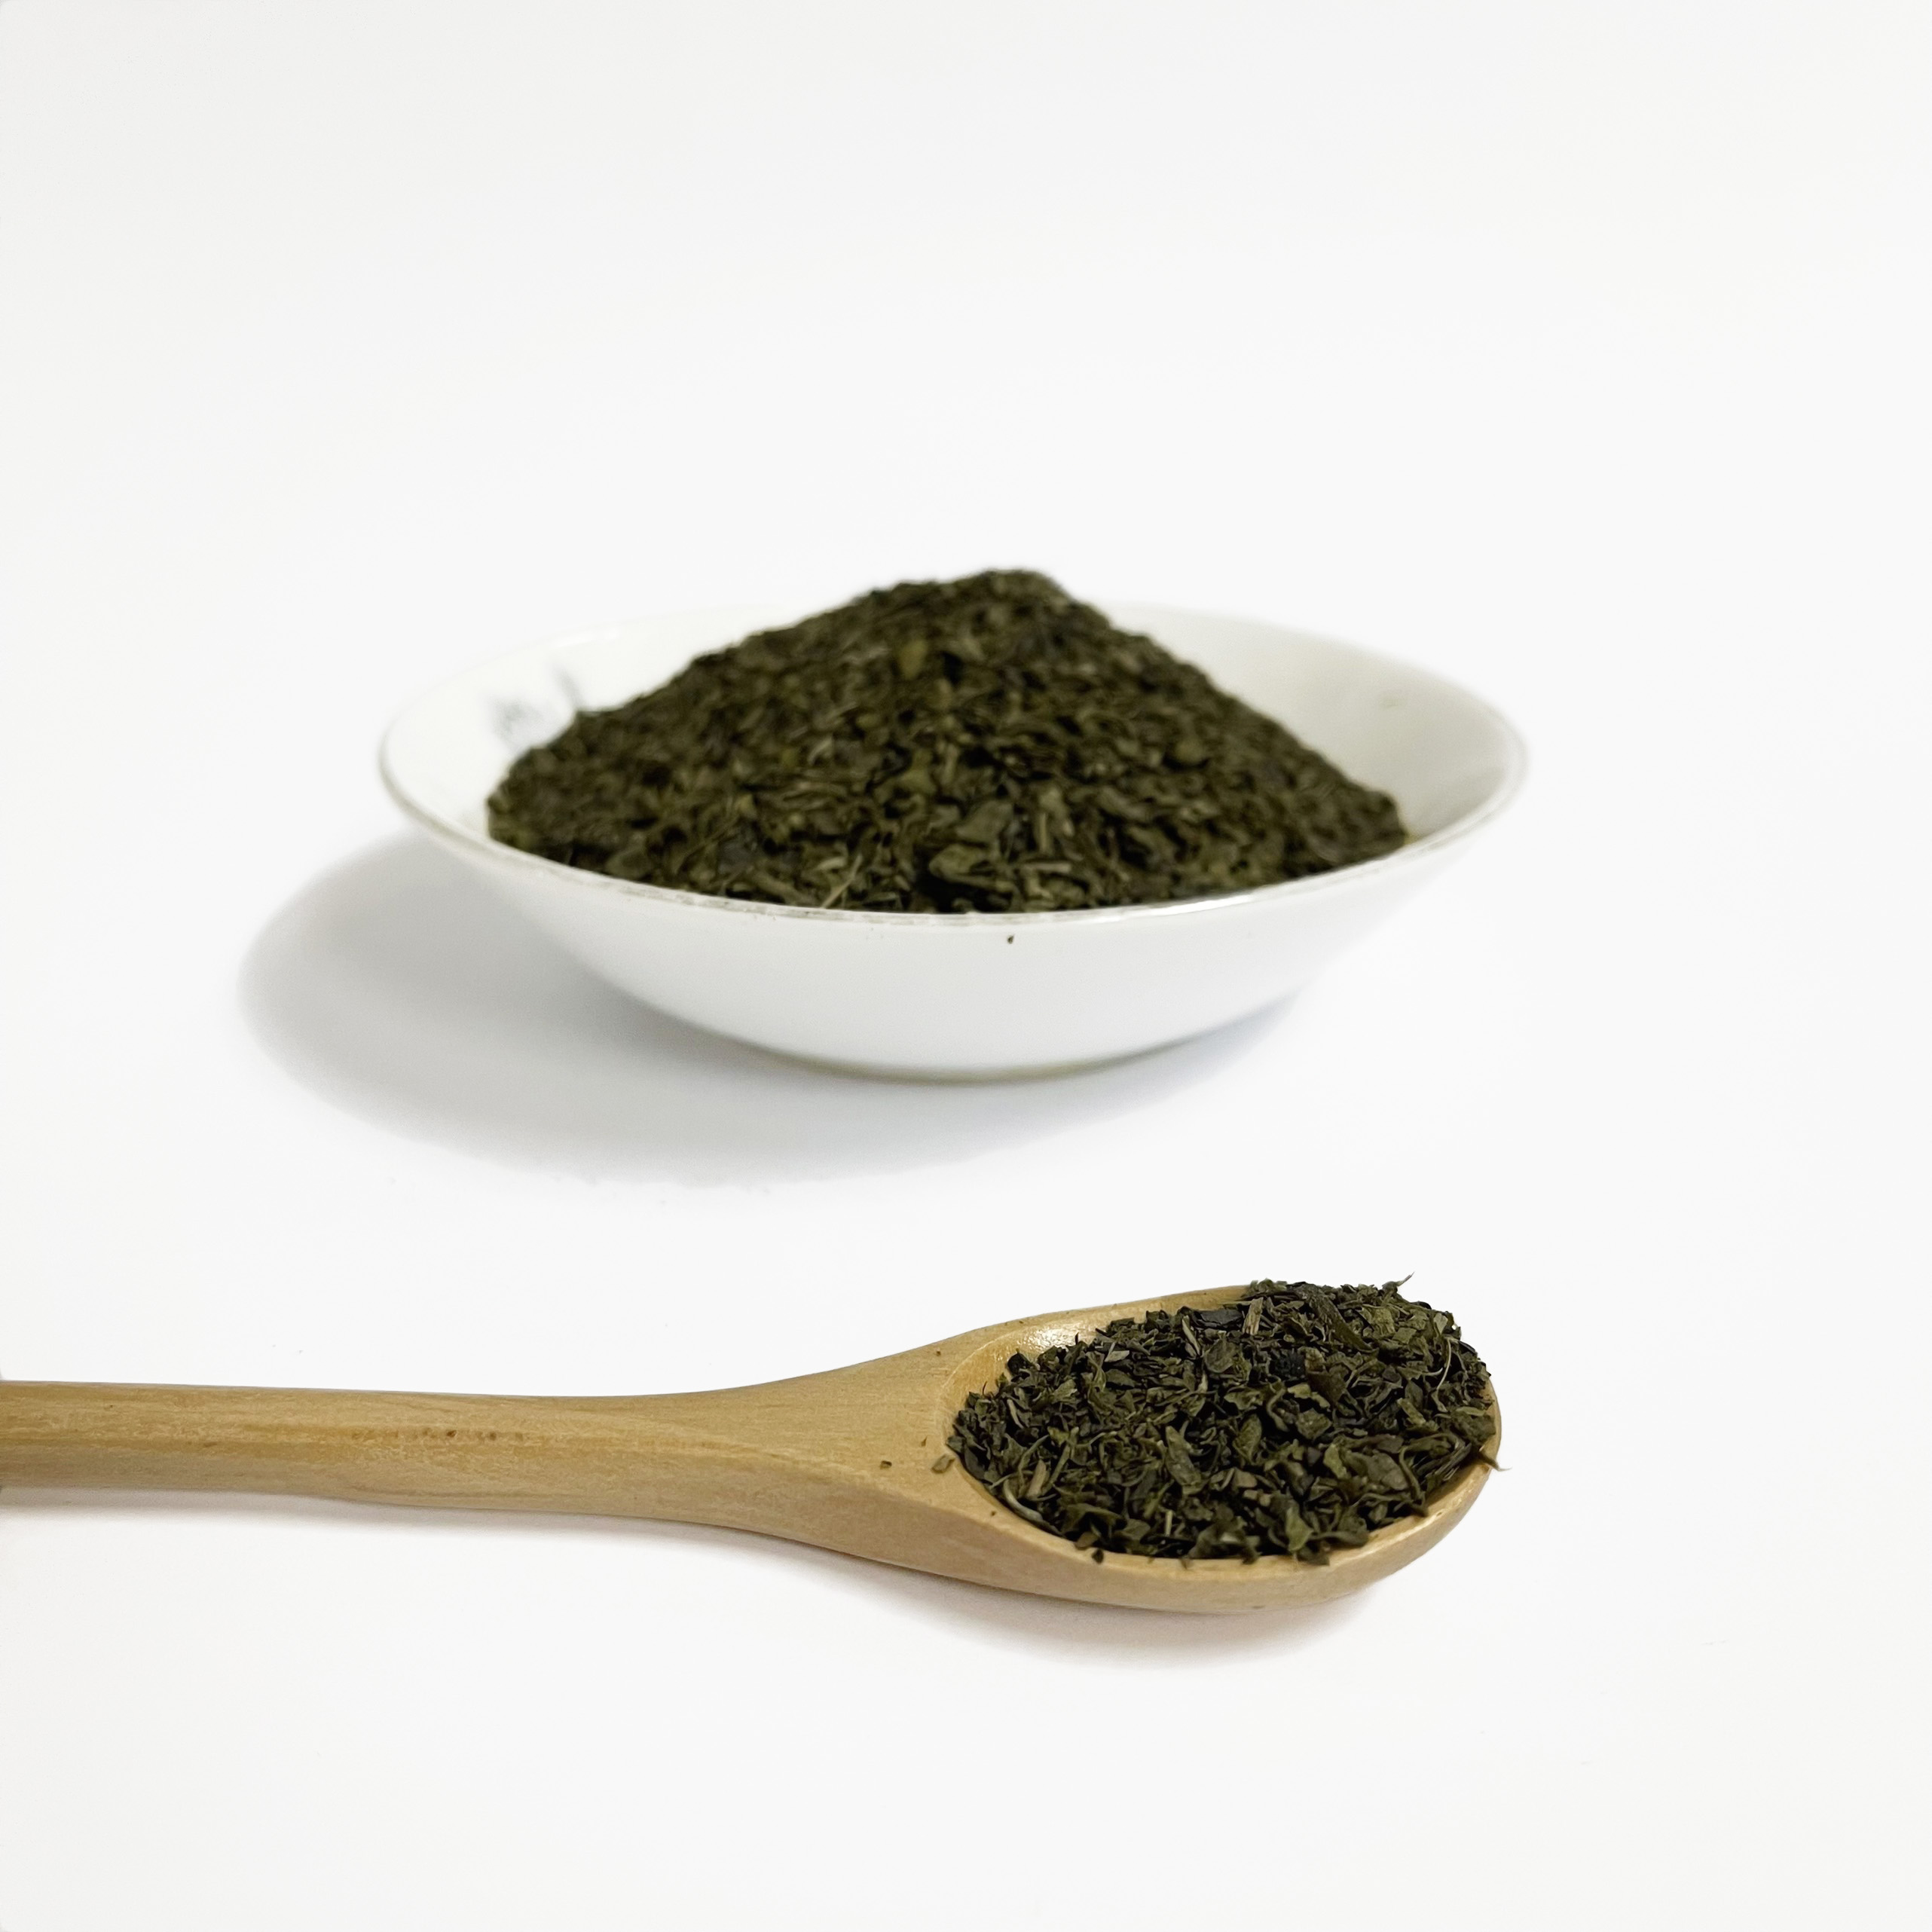 Green Tea Orthodox